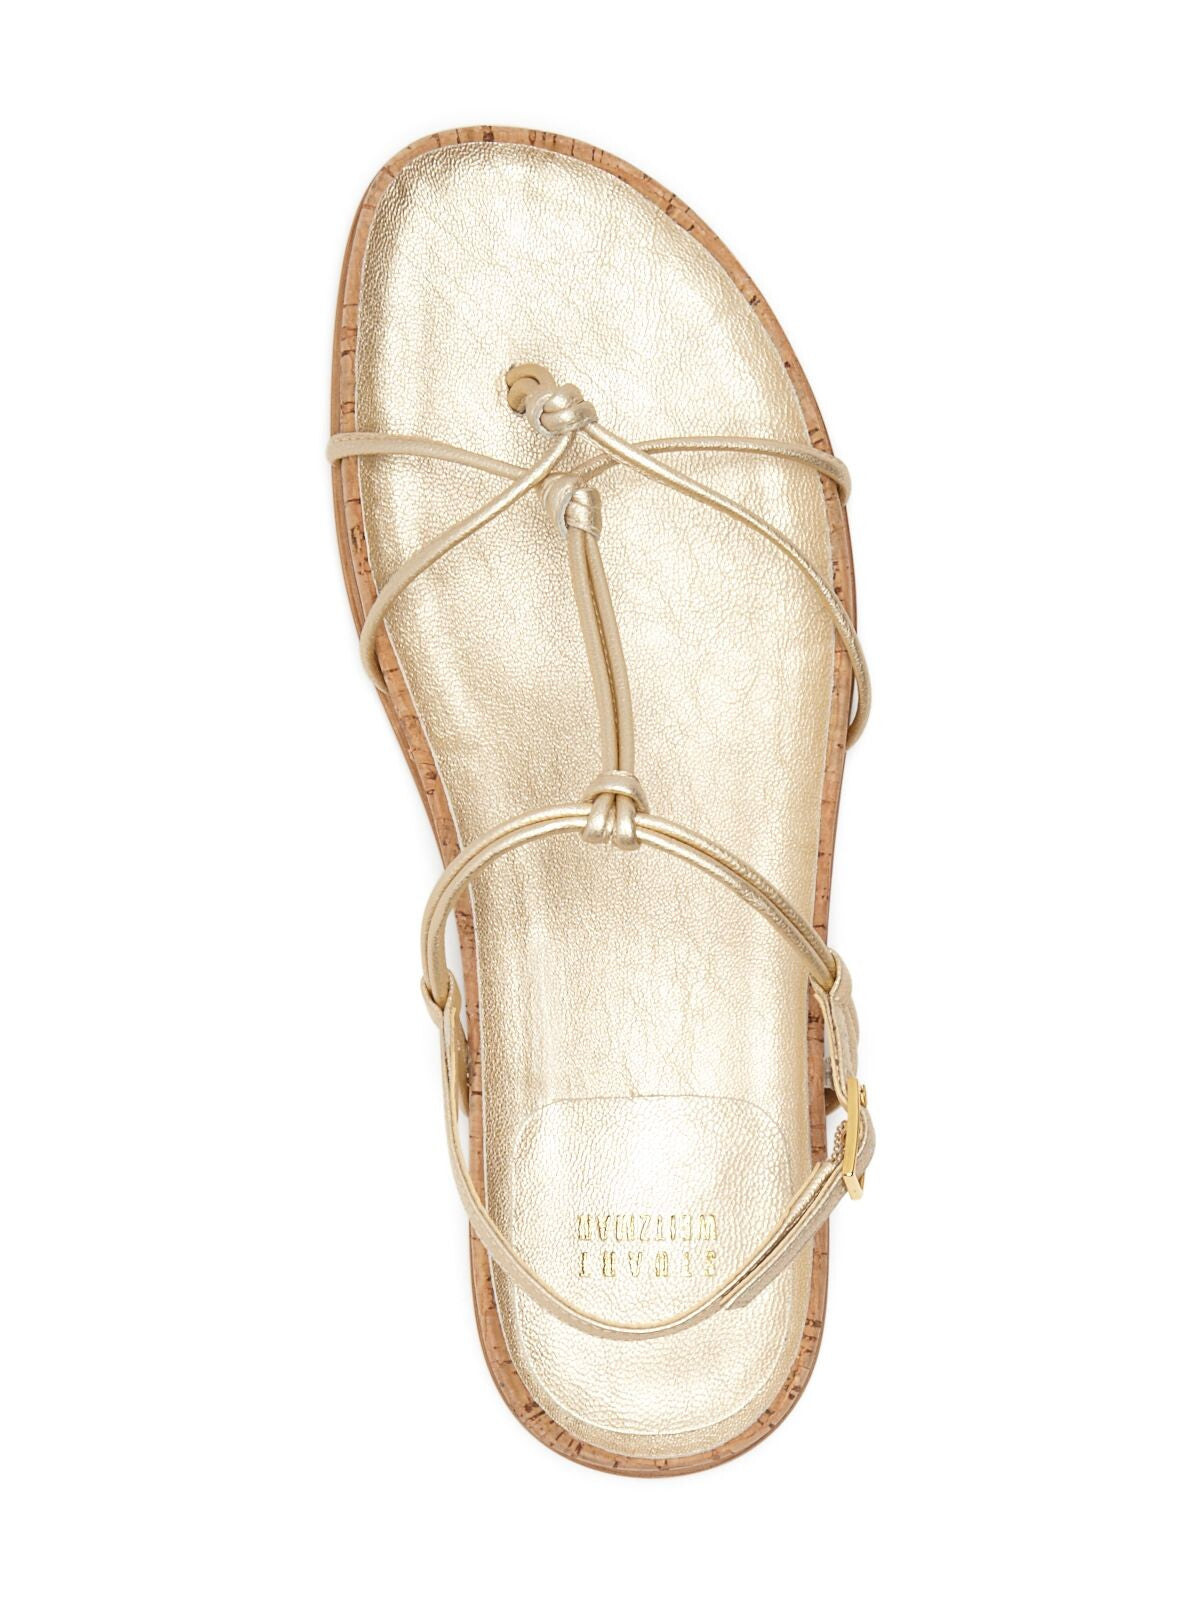 STUART WEITZMAN Womens Gold Slingback Metallic Cork Adjustable Strap Strappy Matty Round Toe Wedge Buckle Thong Sandals Shoes 8.5 M